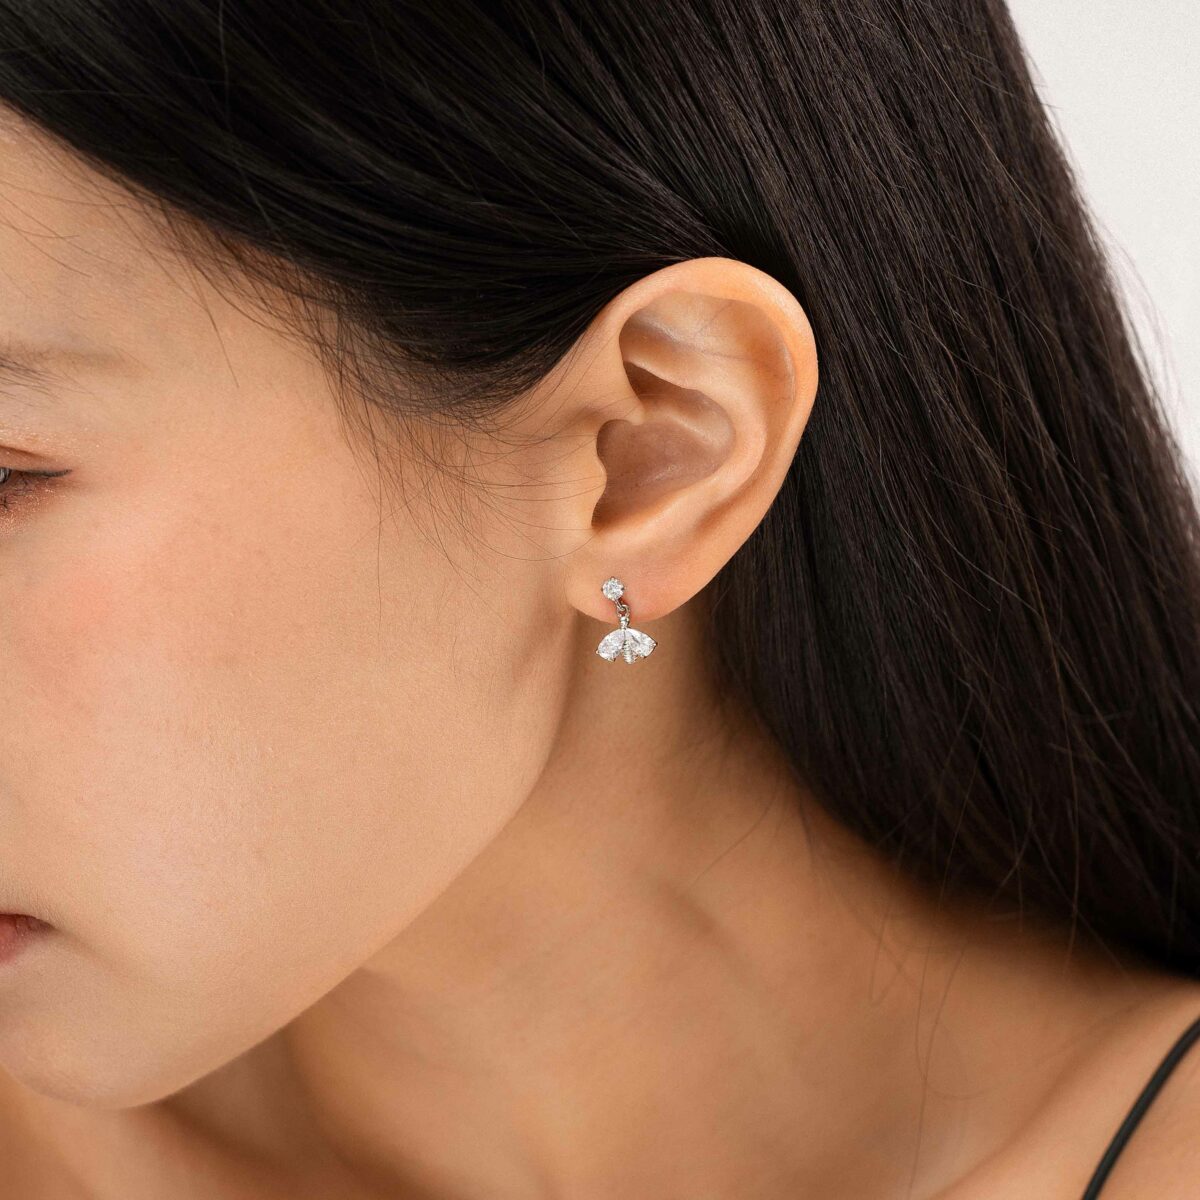 https://m.clubbella.co/product/buzz-earrings-24k-white-gold-plated/ BUZZ SILVER EARRINGS (1)